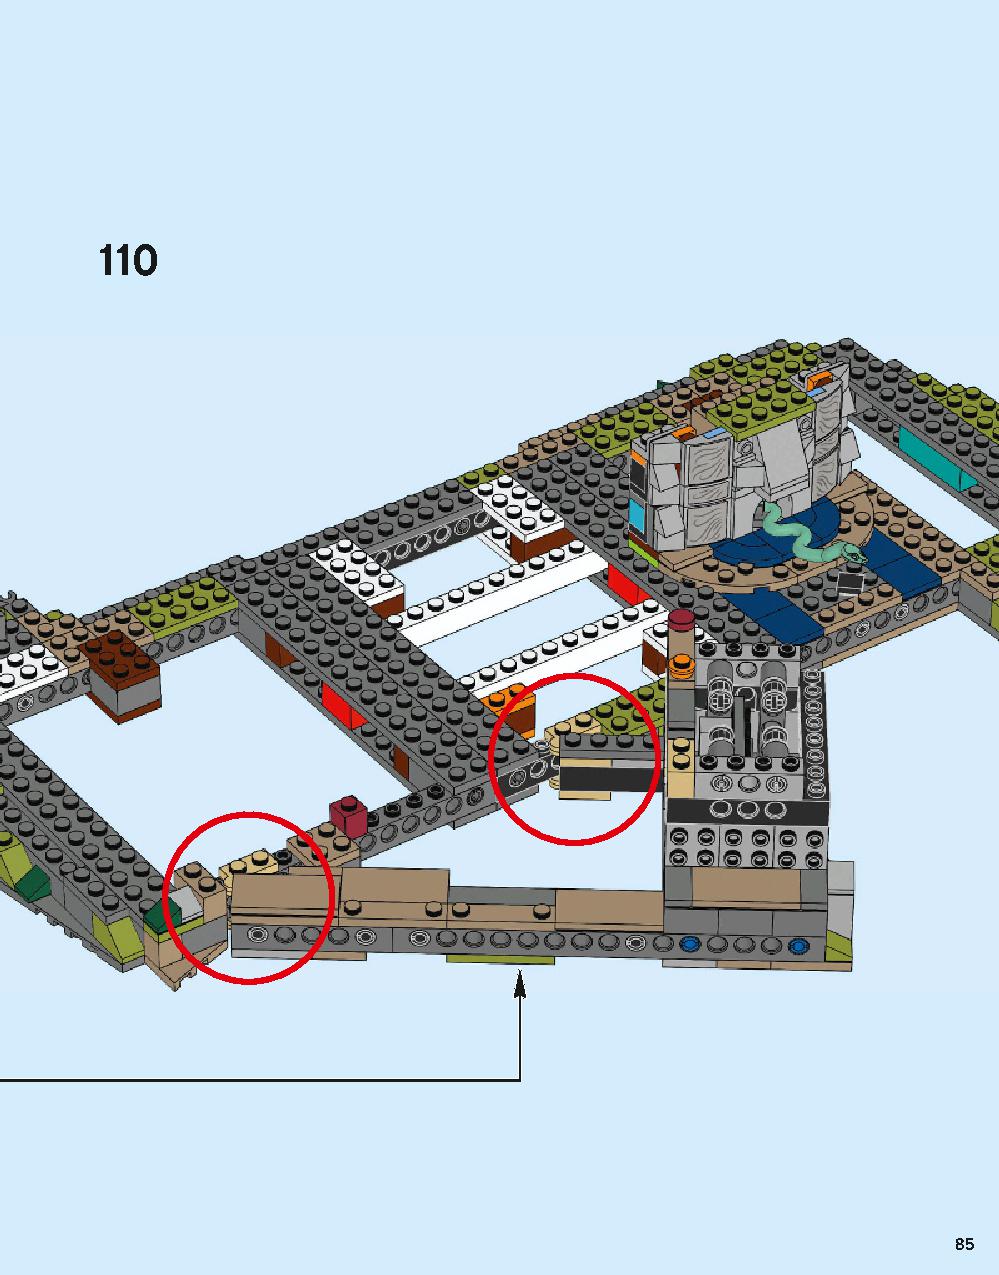 Hogwarts Castle 71043 LEGO information LEGO instructions 85 page